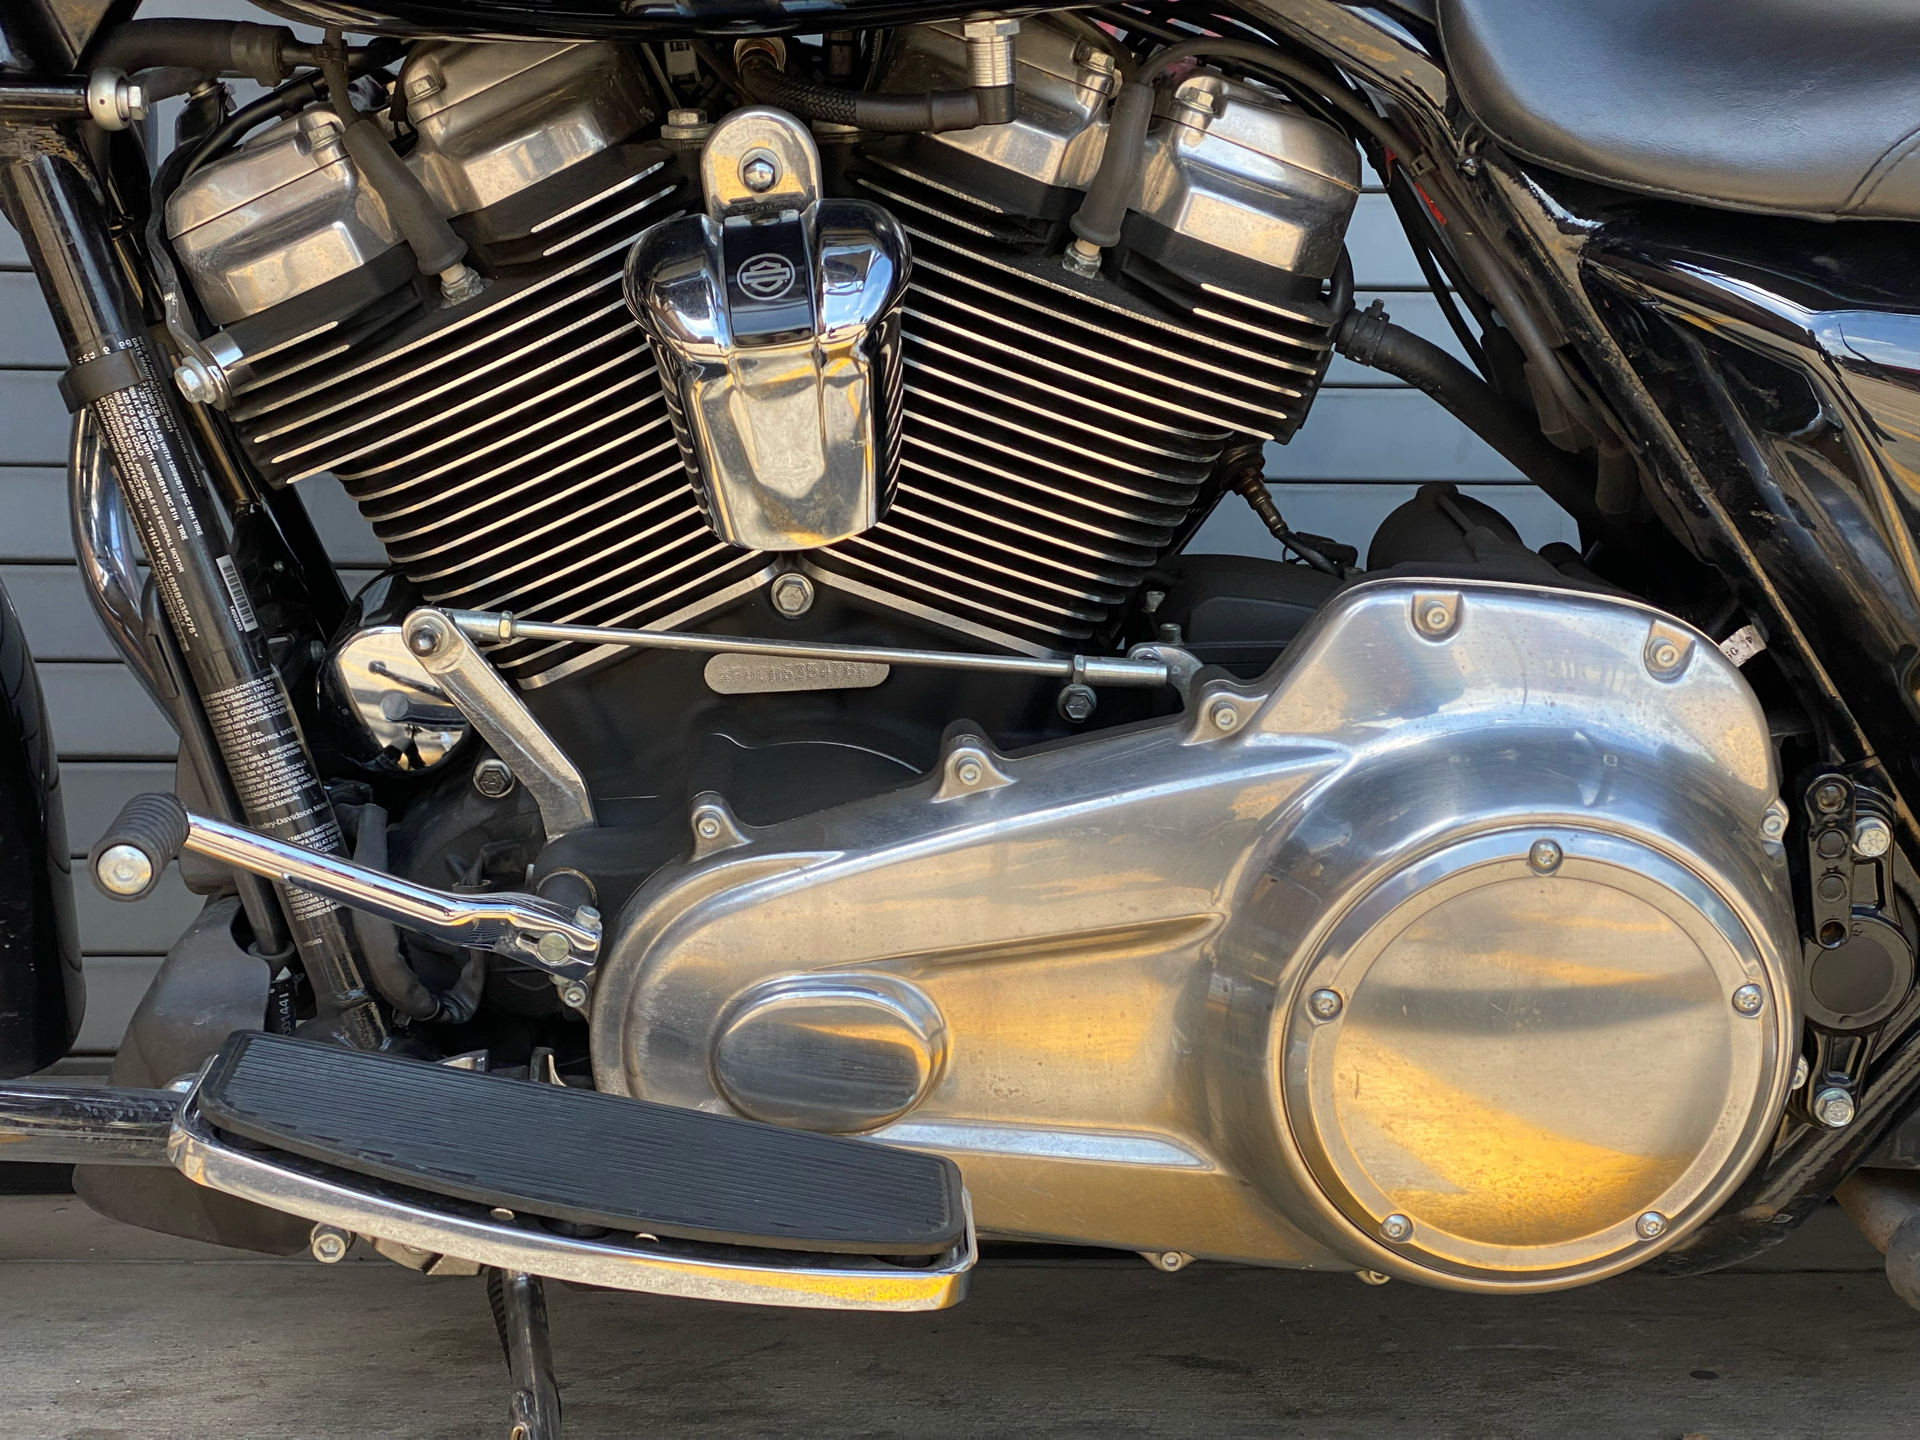 2021 Harley-Davidson Electra Glide® Standard in Carrollton, Texas - Photo 17